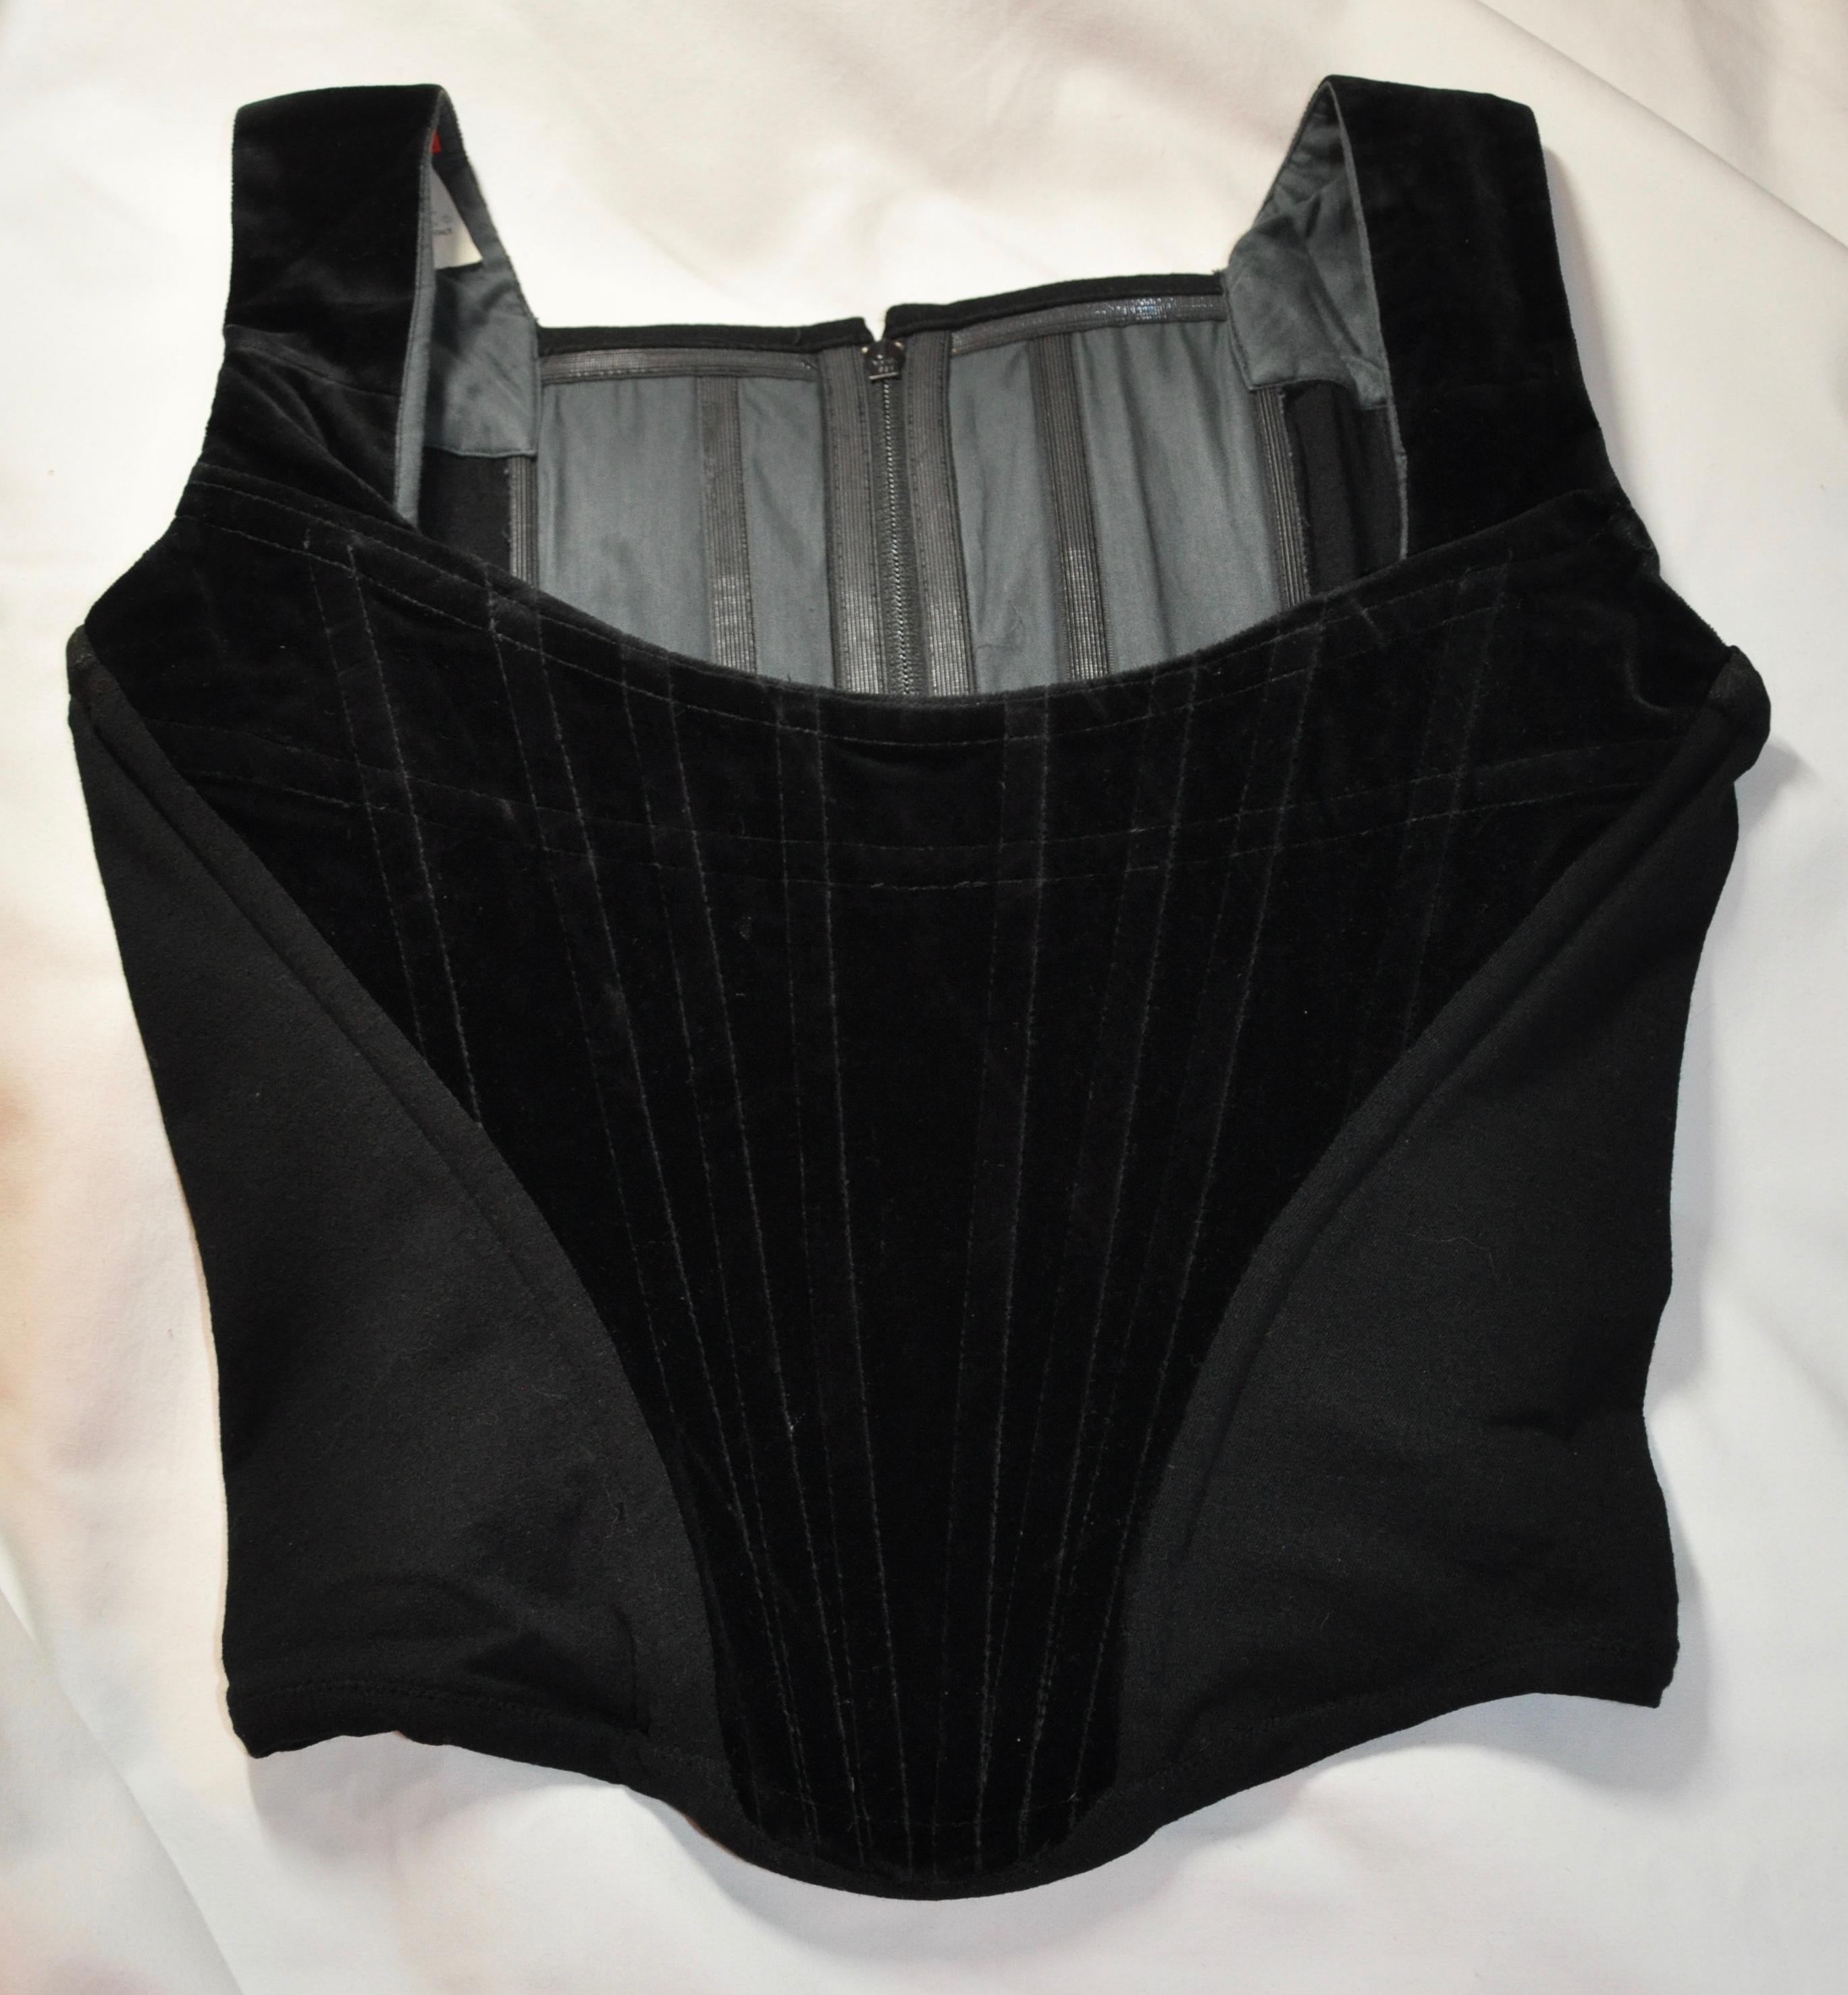 vivienne westwood black corset top